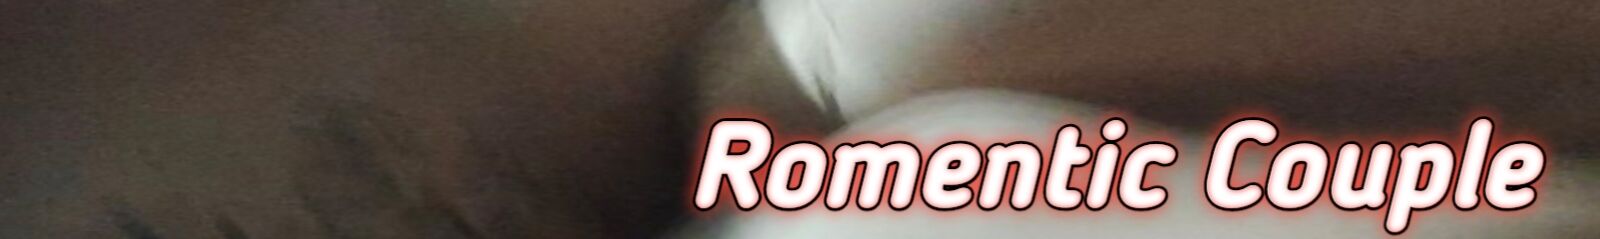 Romentic couple